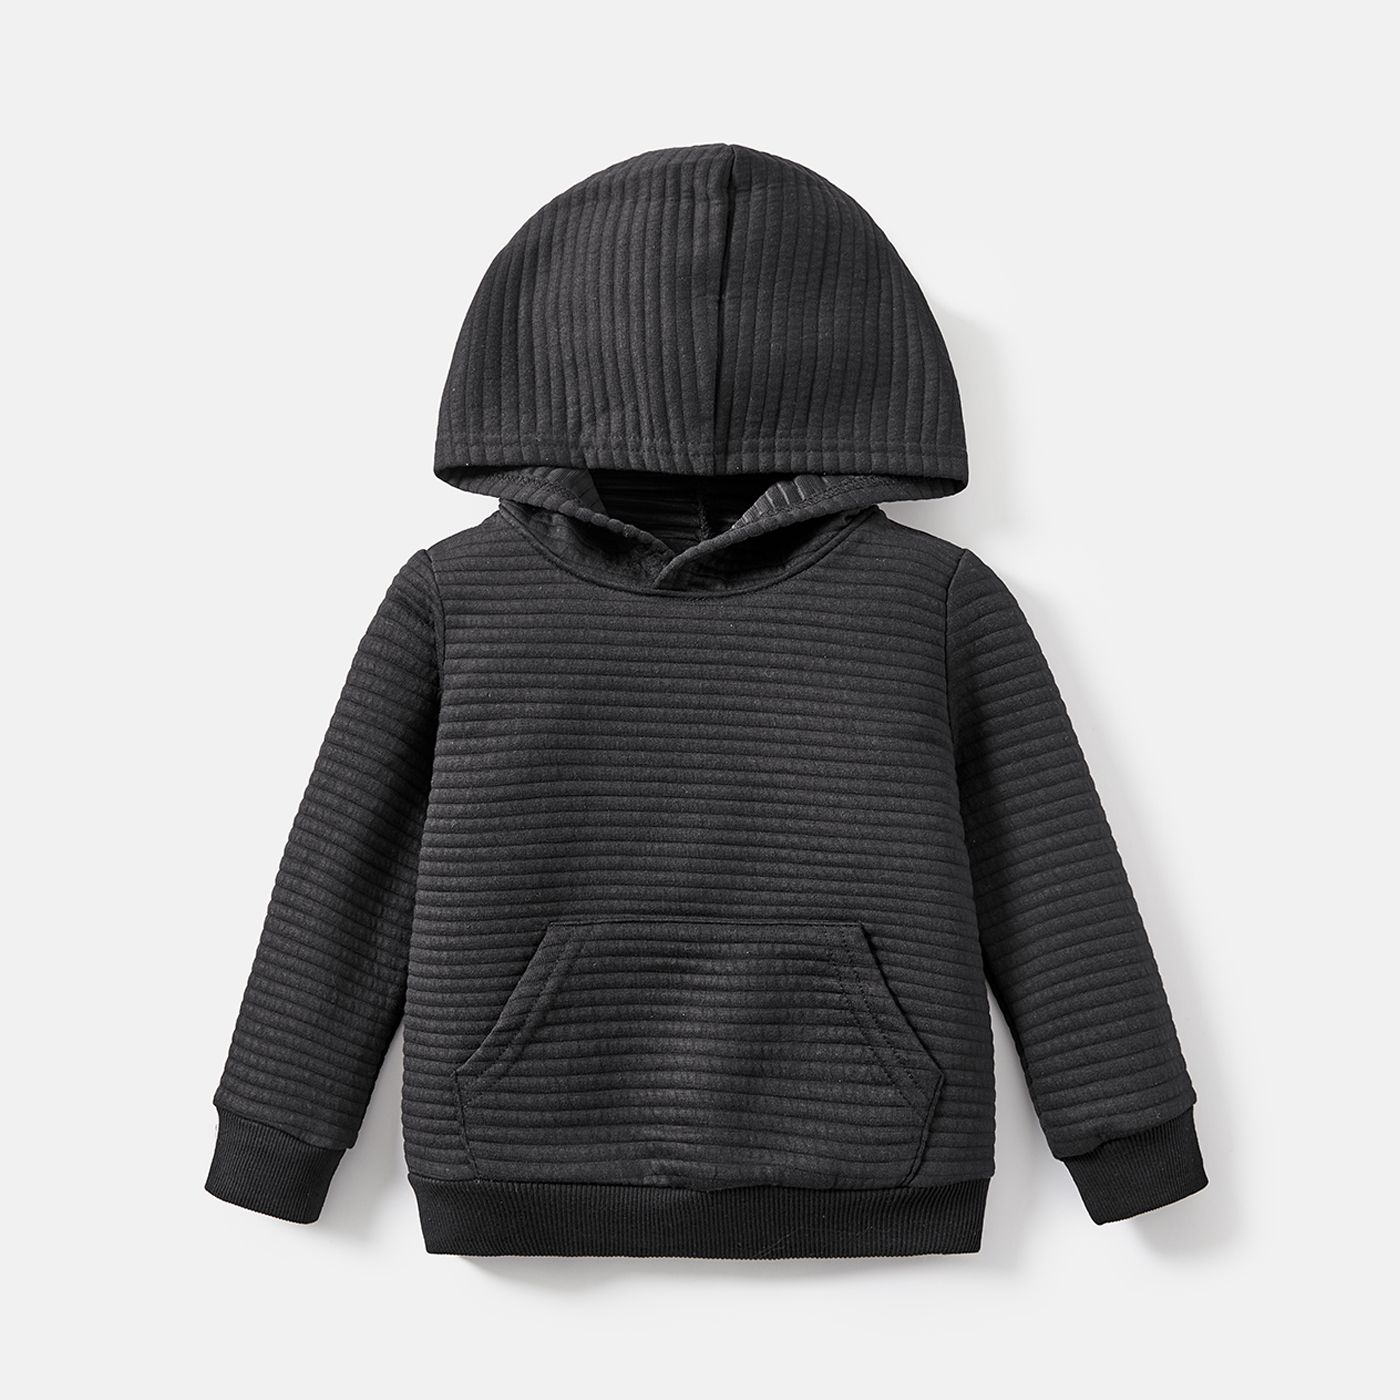 Toddler/Kid Boy Solid Color Textured Hoodie Sweatshirt